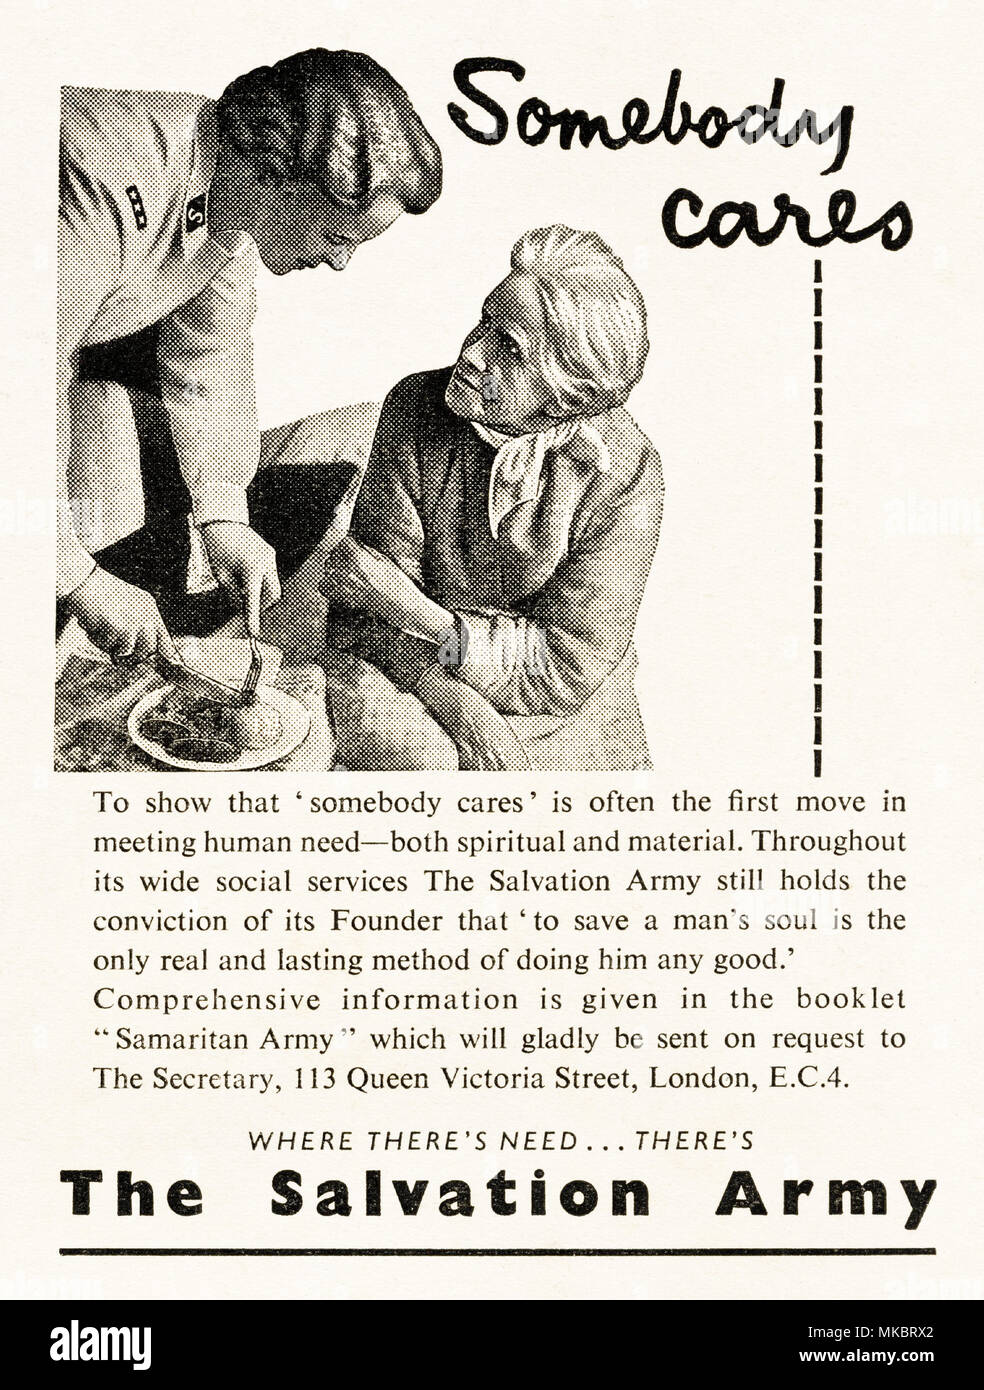 1950s vintage original advertisement advertising The Salvation Army in English magazine circa 1958 Stock Photo